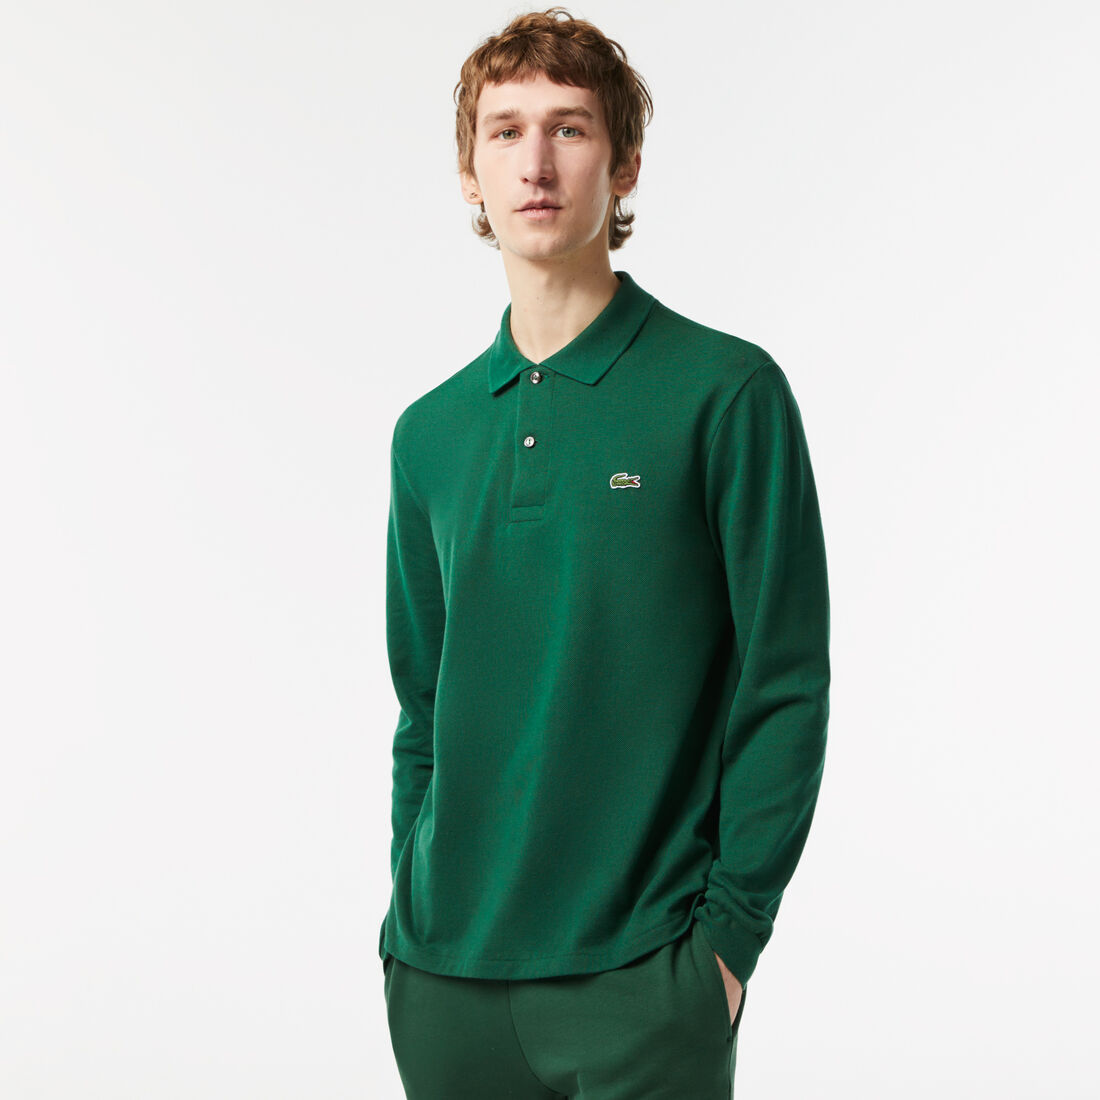 Lacoste Long-sleeve Klassische Fit L.12.12 Polo Shirts Herren Grün | TRJQ-85219